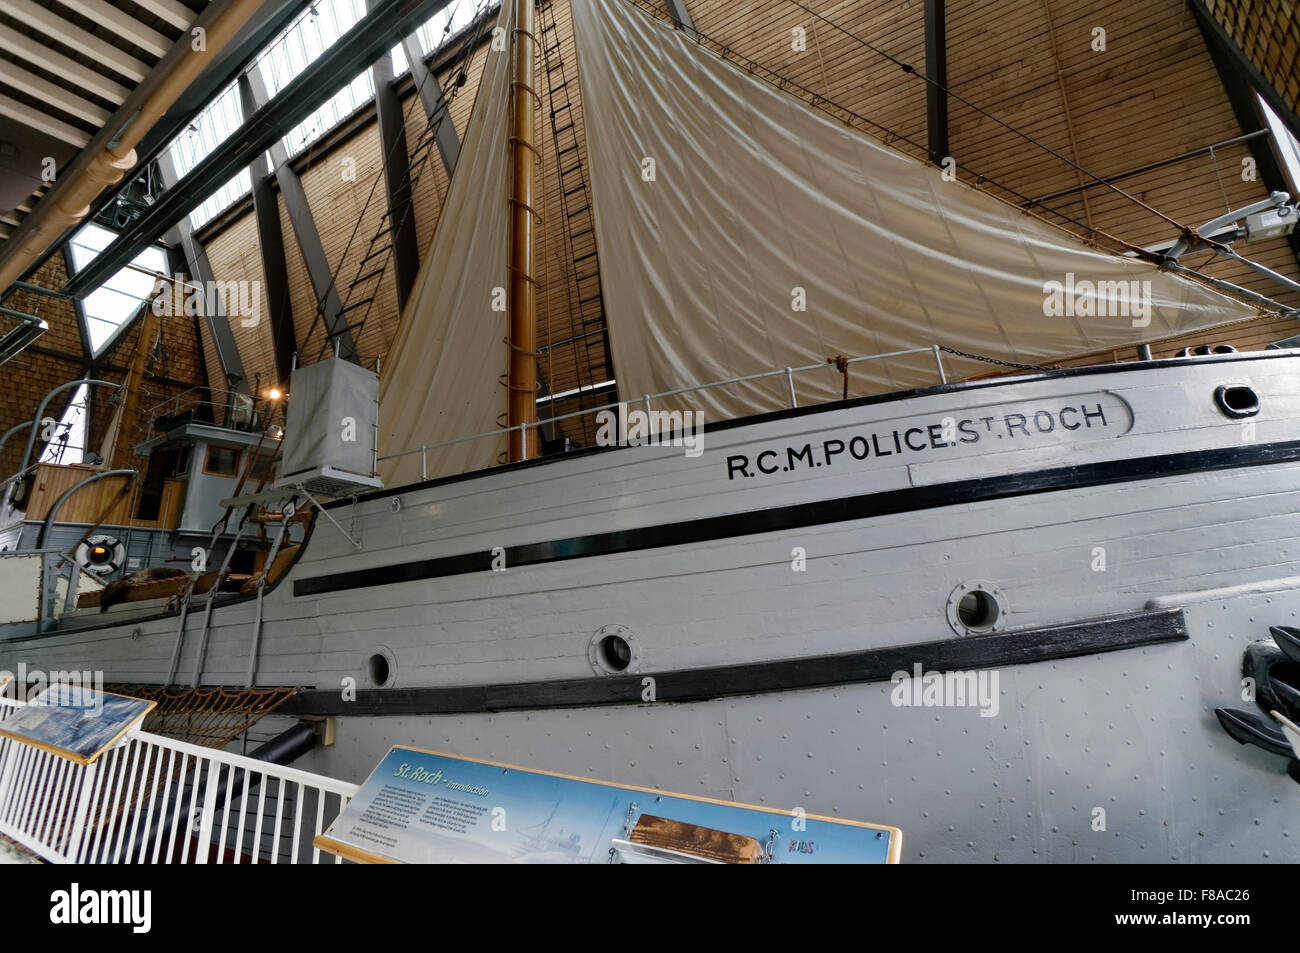 RCMP St. Roch schooner, Vancouver Maritime Museum, Hadden Park, Vancouver, BC, Canada Stock Photo